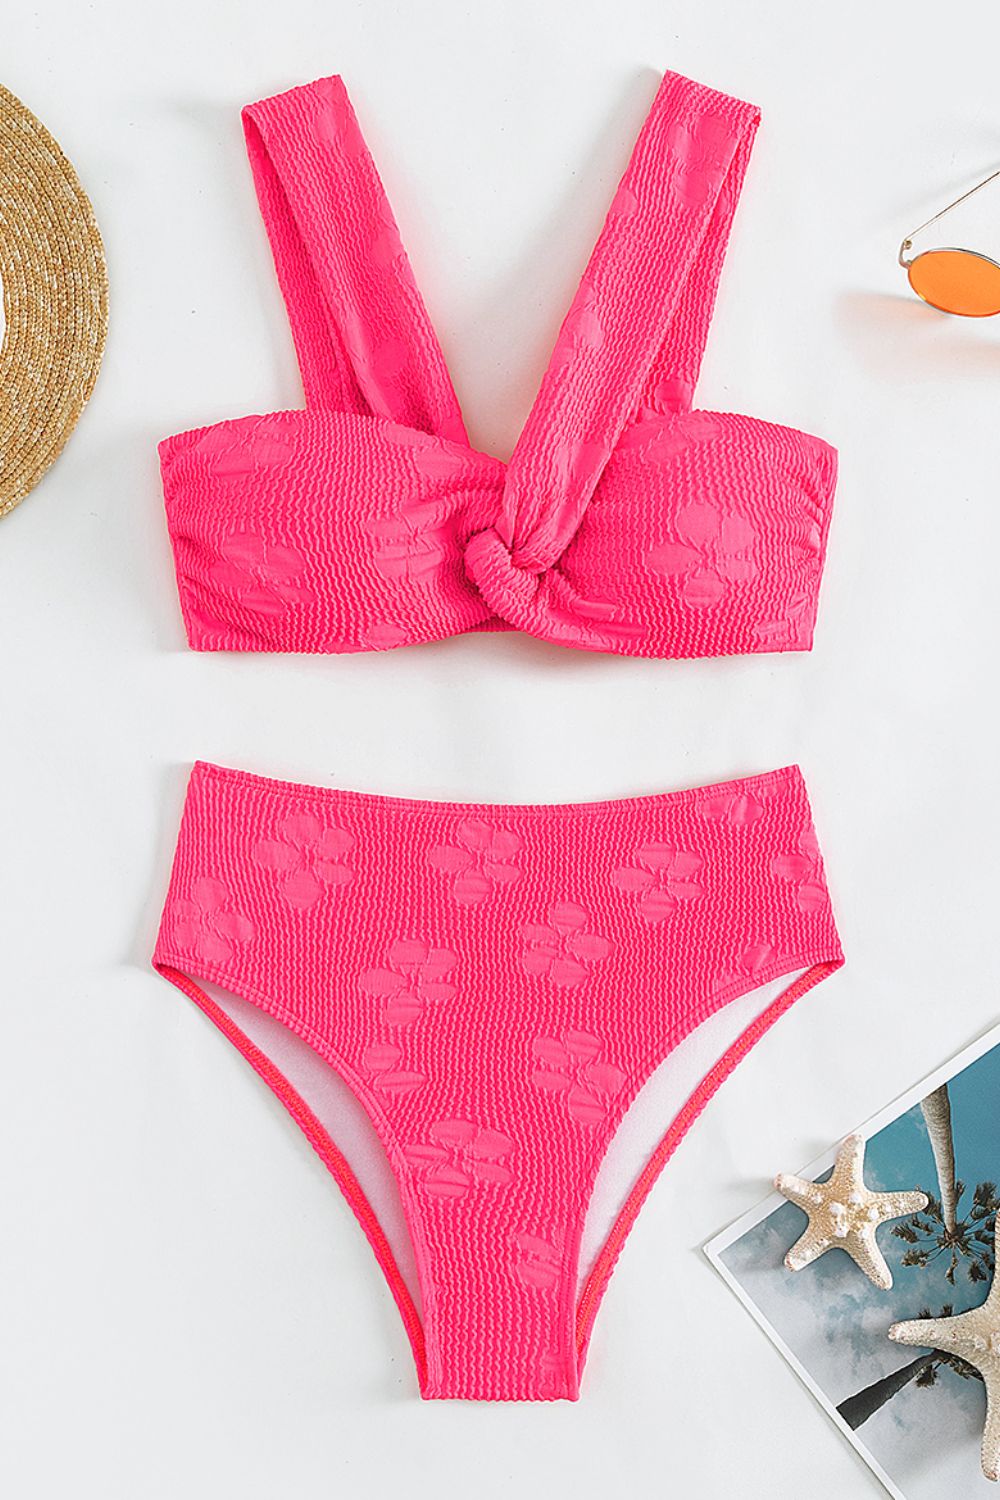 Textured Twisted Detail Bikini Set - Pink / S - Women’s Clothing & Accessories - Swimwear - 1 - 2024